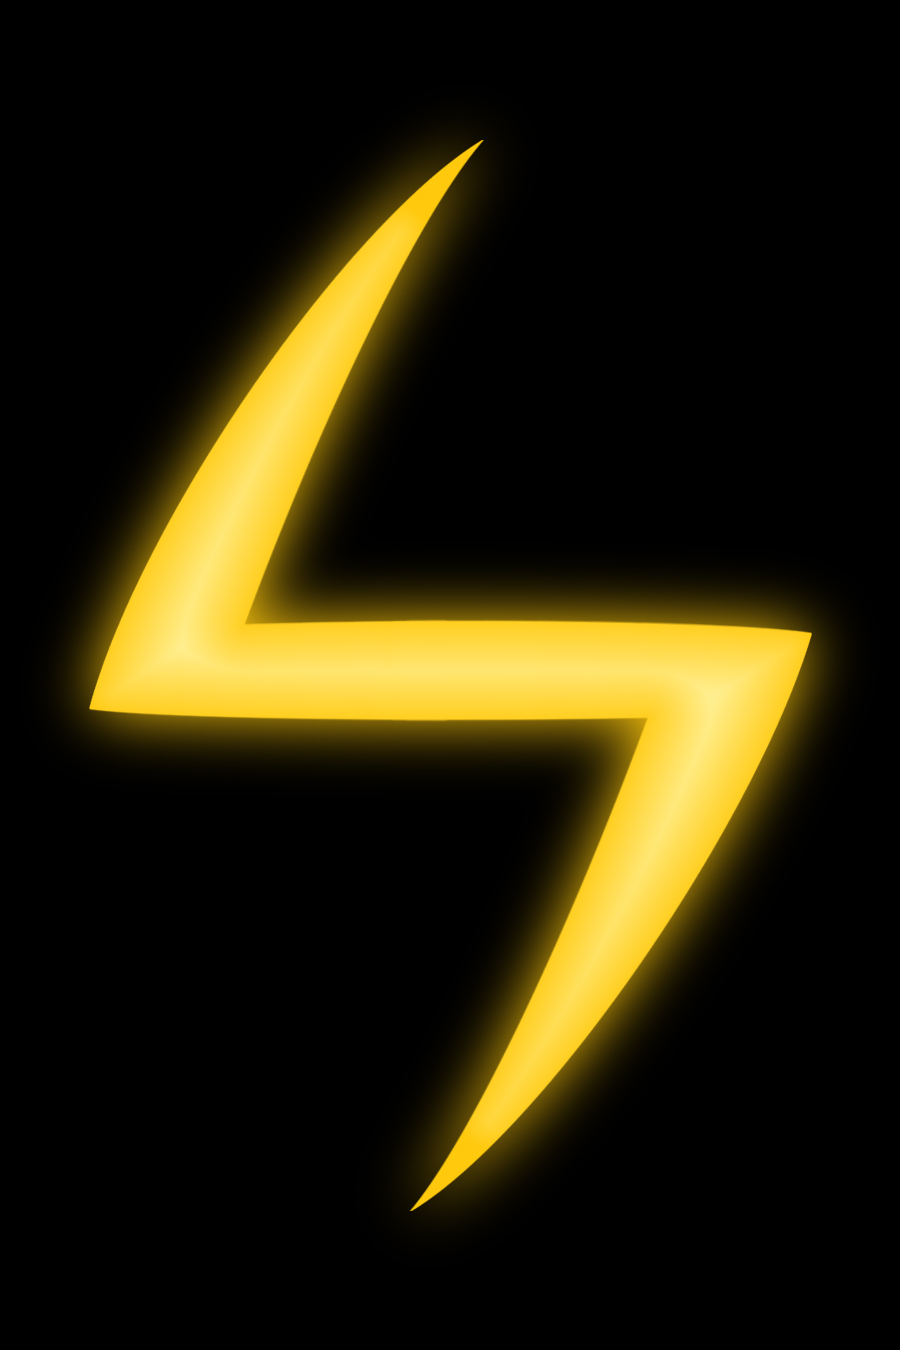 Ms Marvel Lightning Bolt Logo by pythonxix on Clipart library